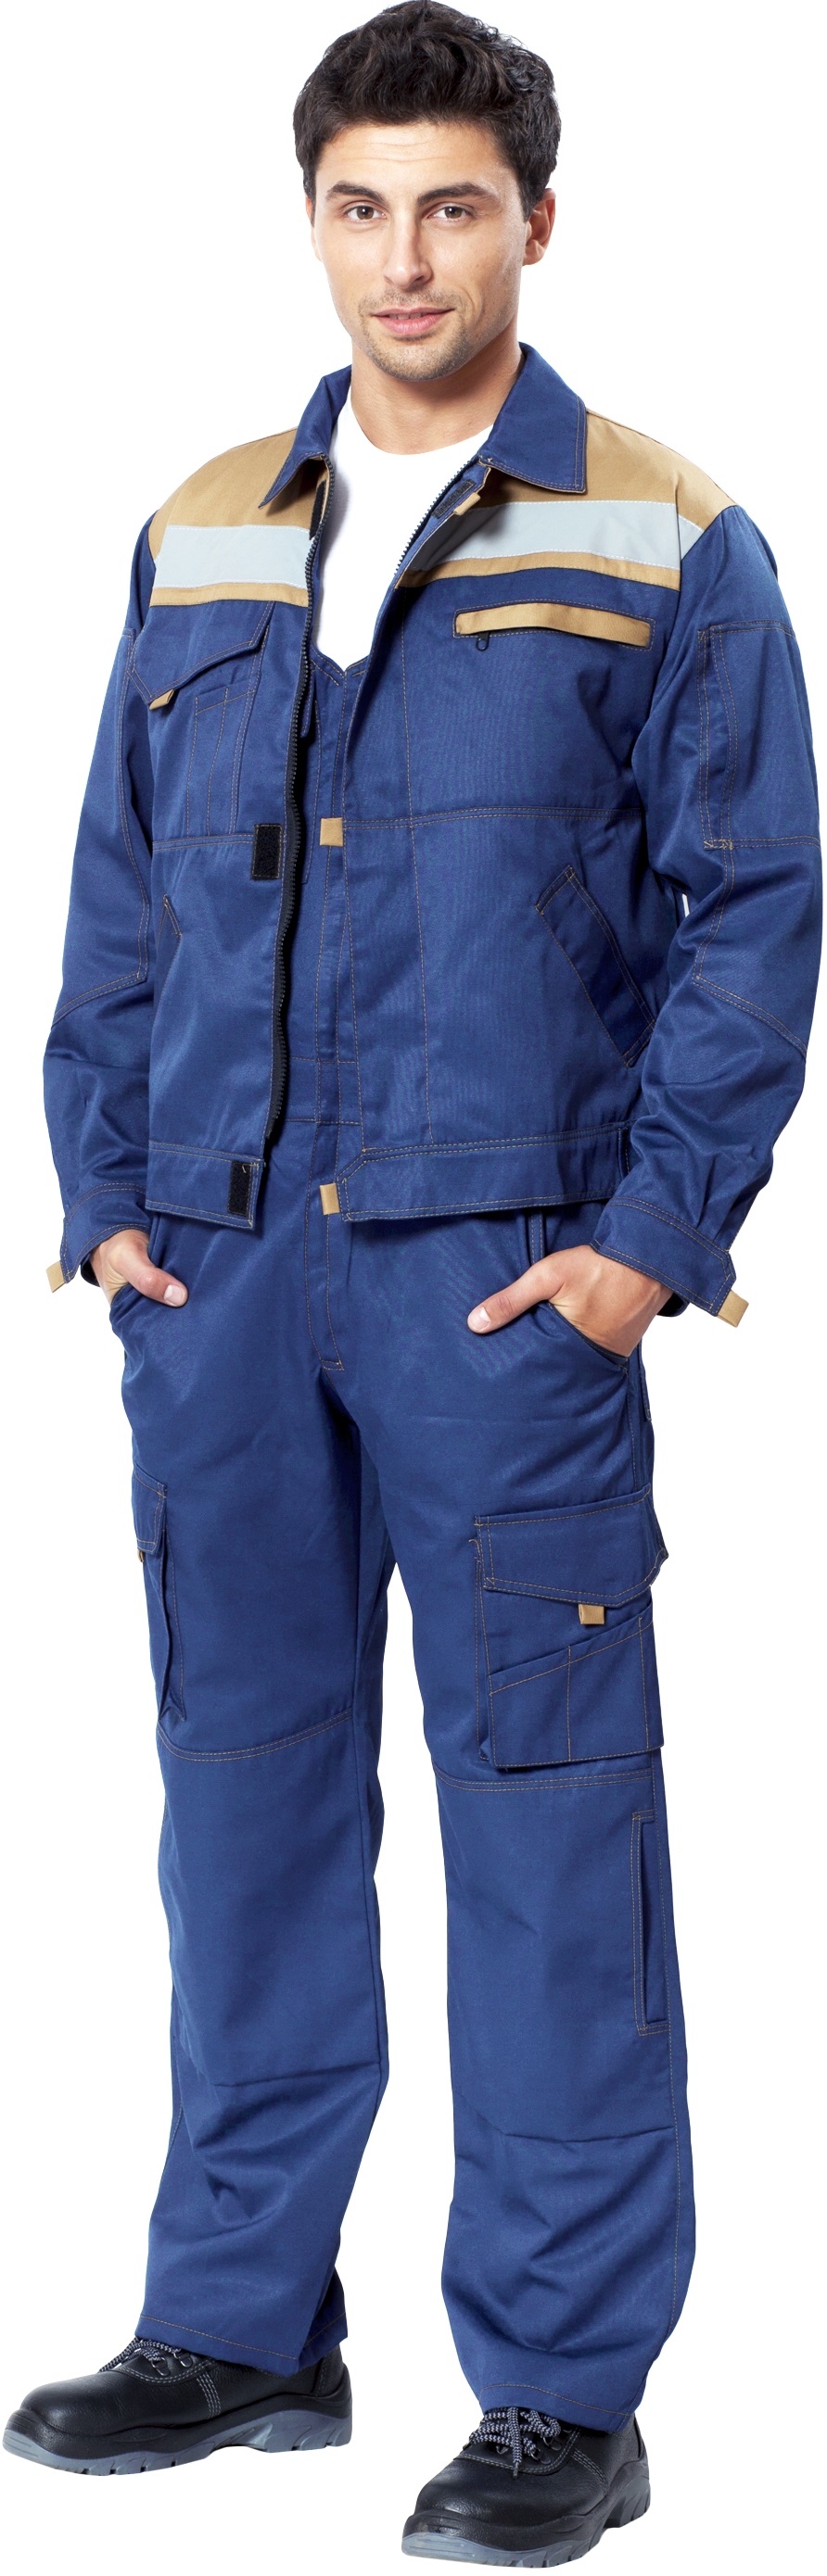 Куртка РОЛЬФ 2, т.синий-бежевый